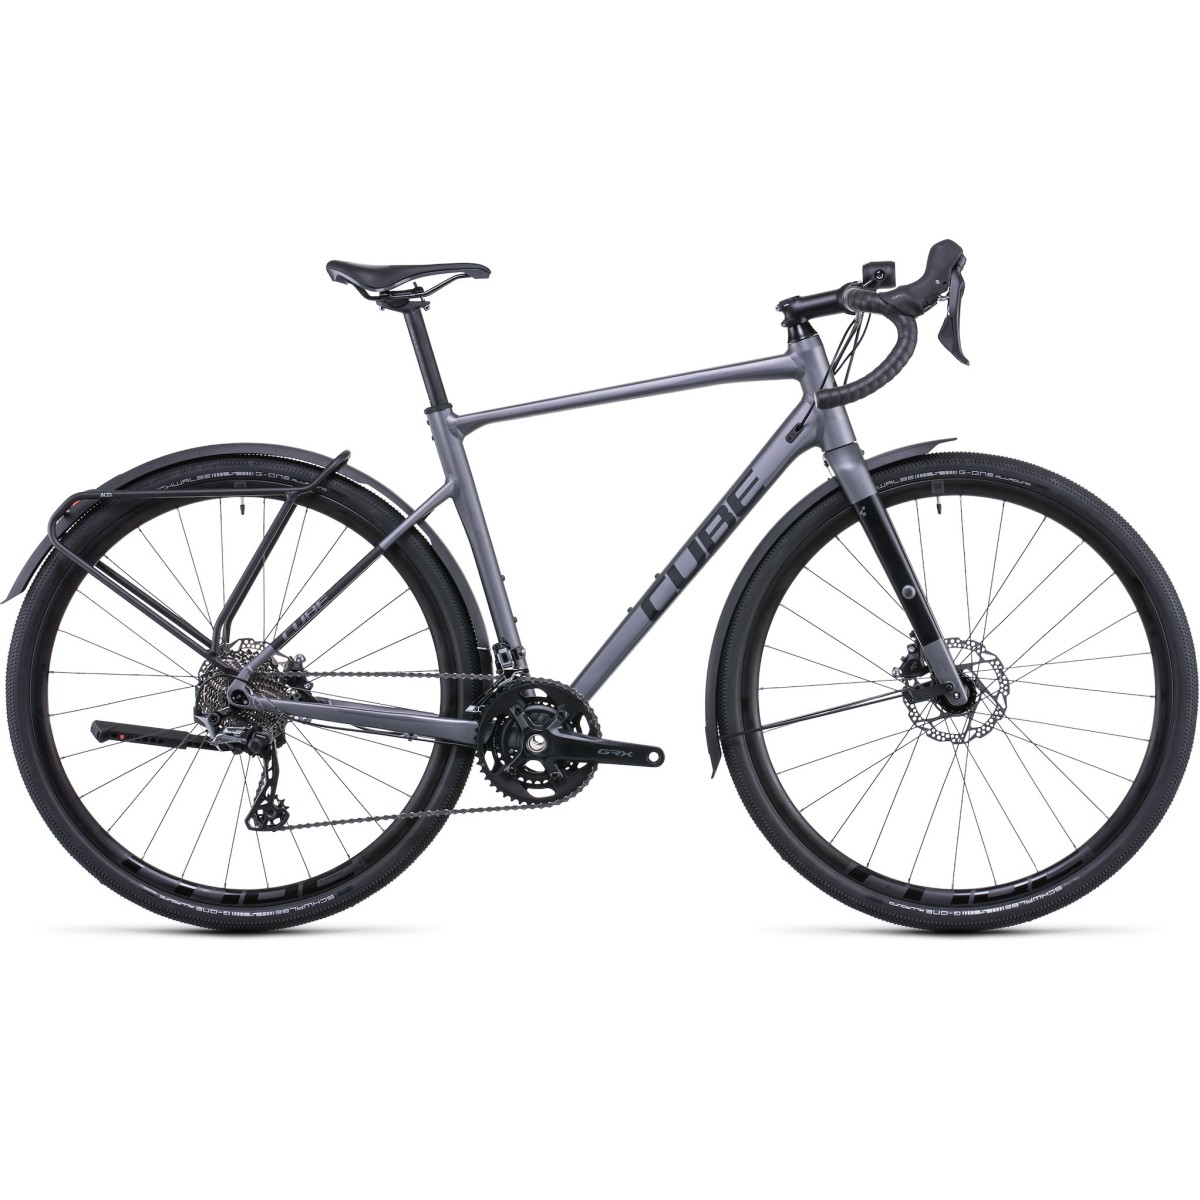 CUBE NUROAD RACE FE gravel bicycle - grey/black - 2022